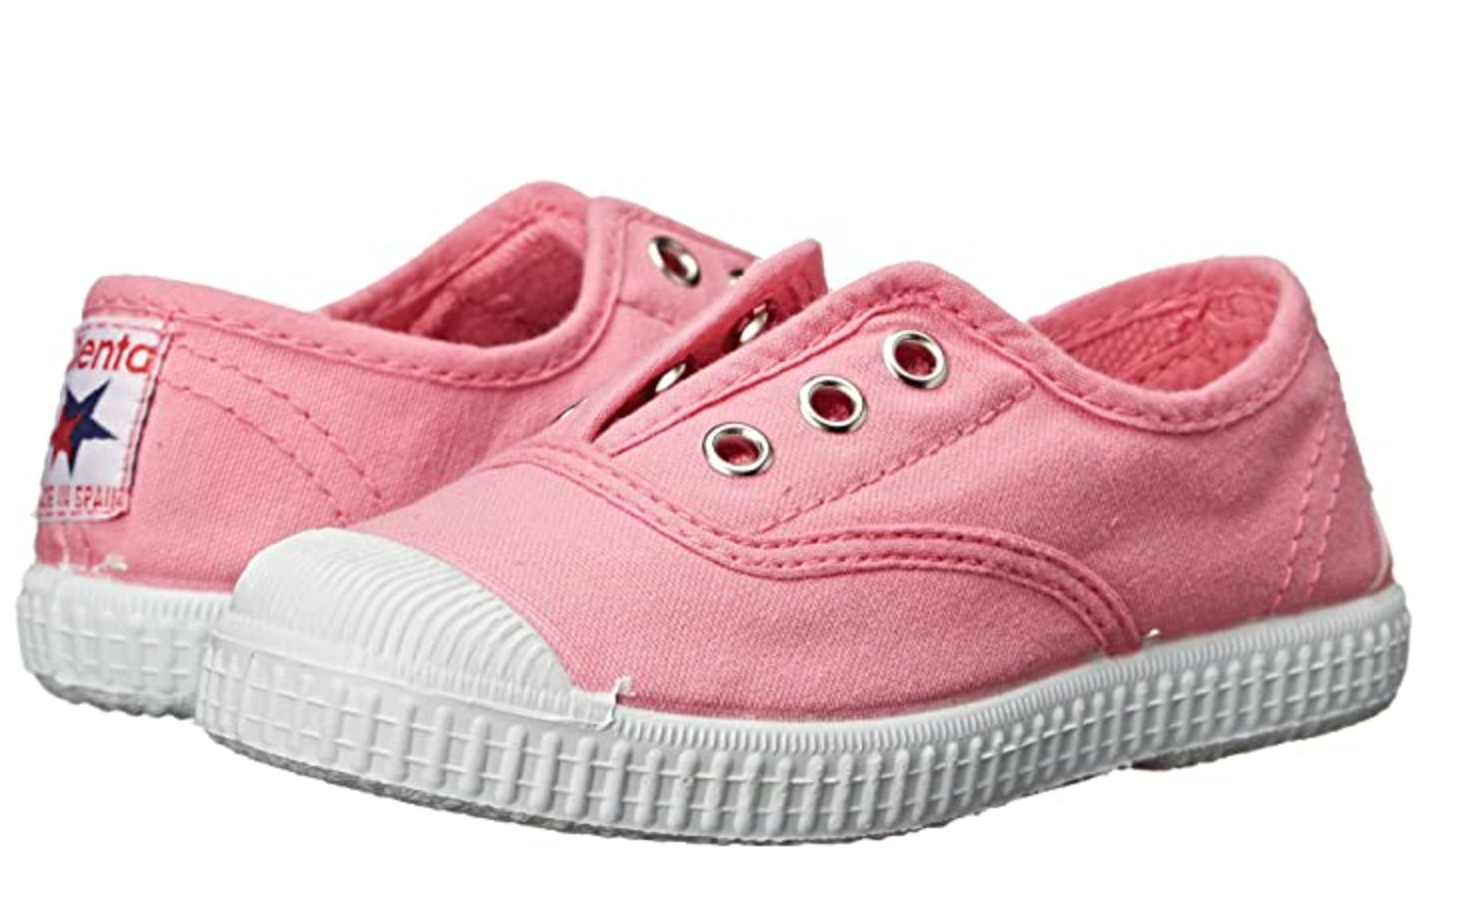 Cienta shoe pink nuevo slip on sneaker